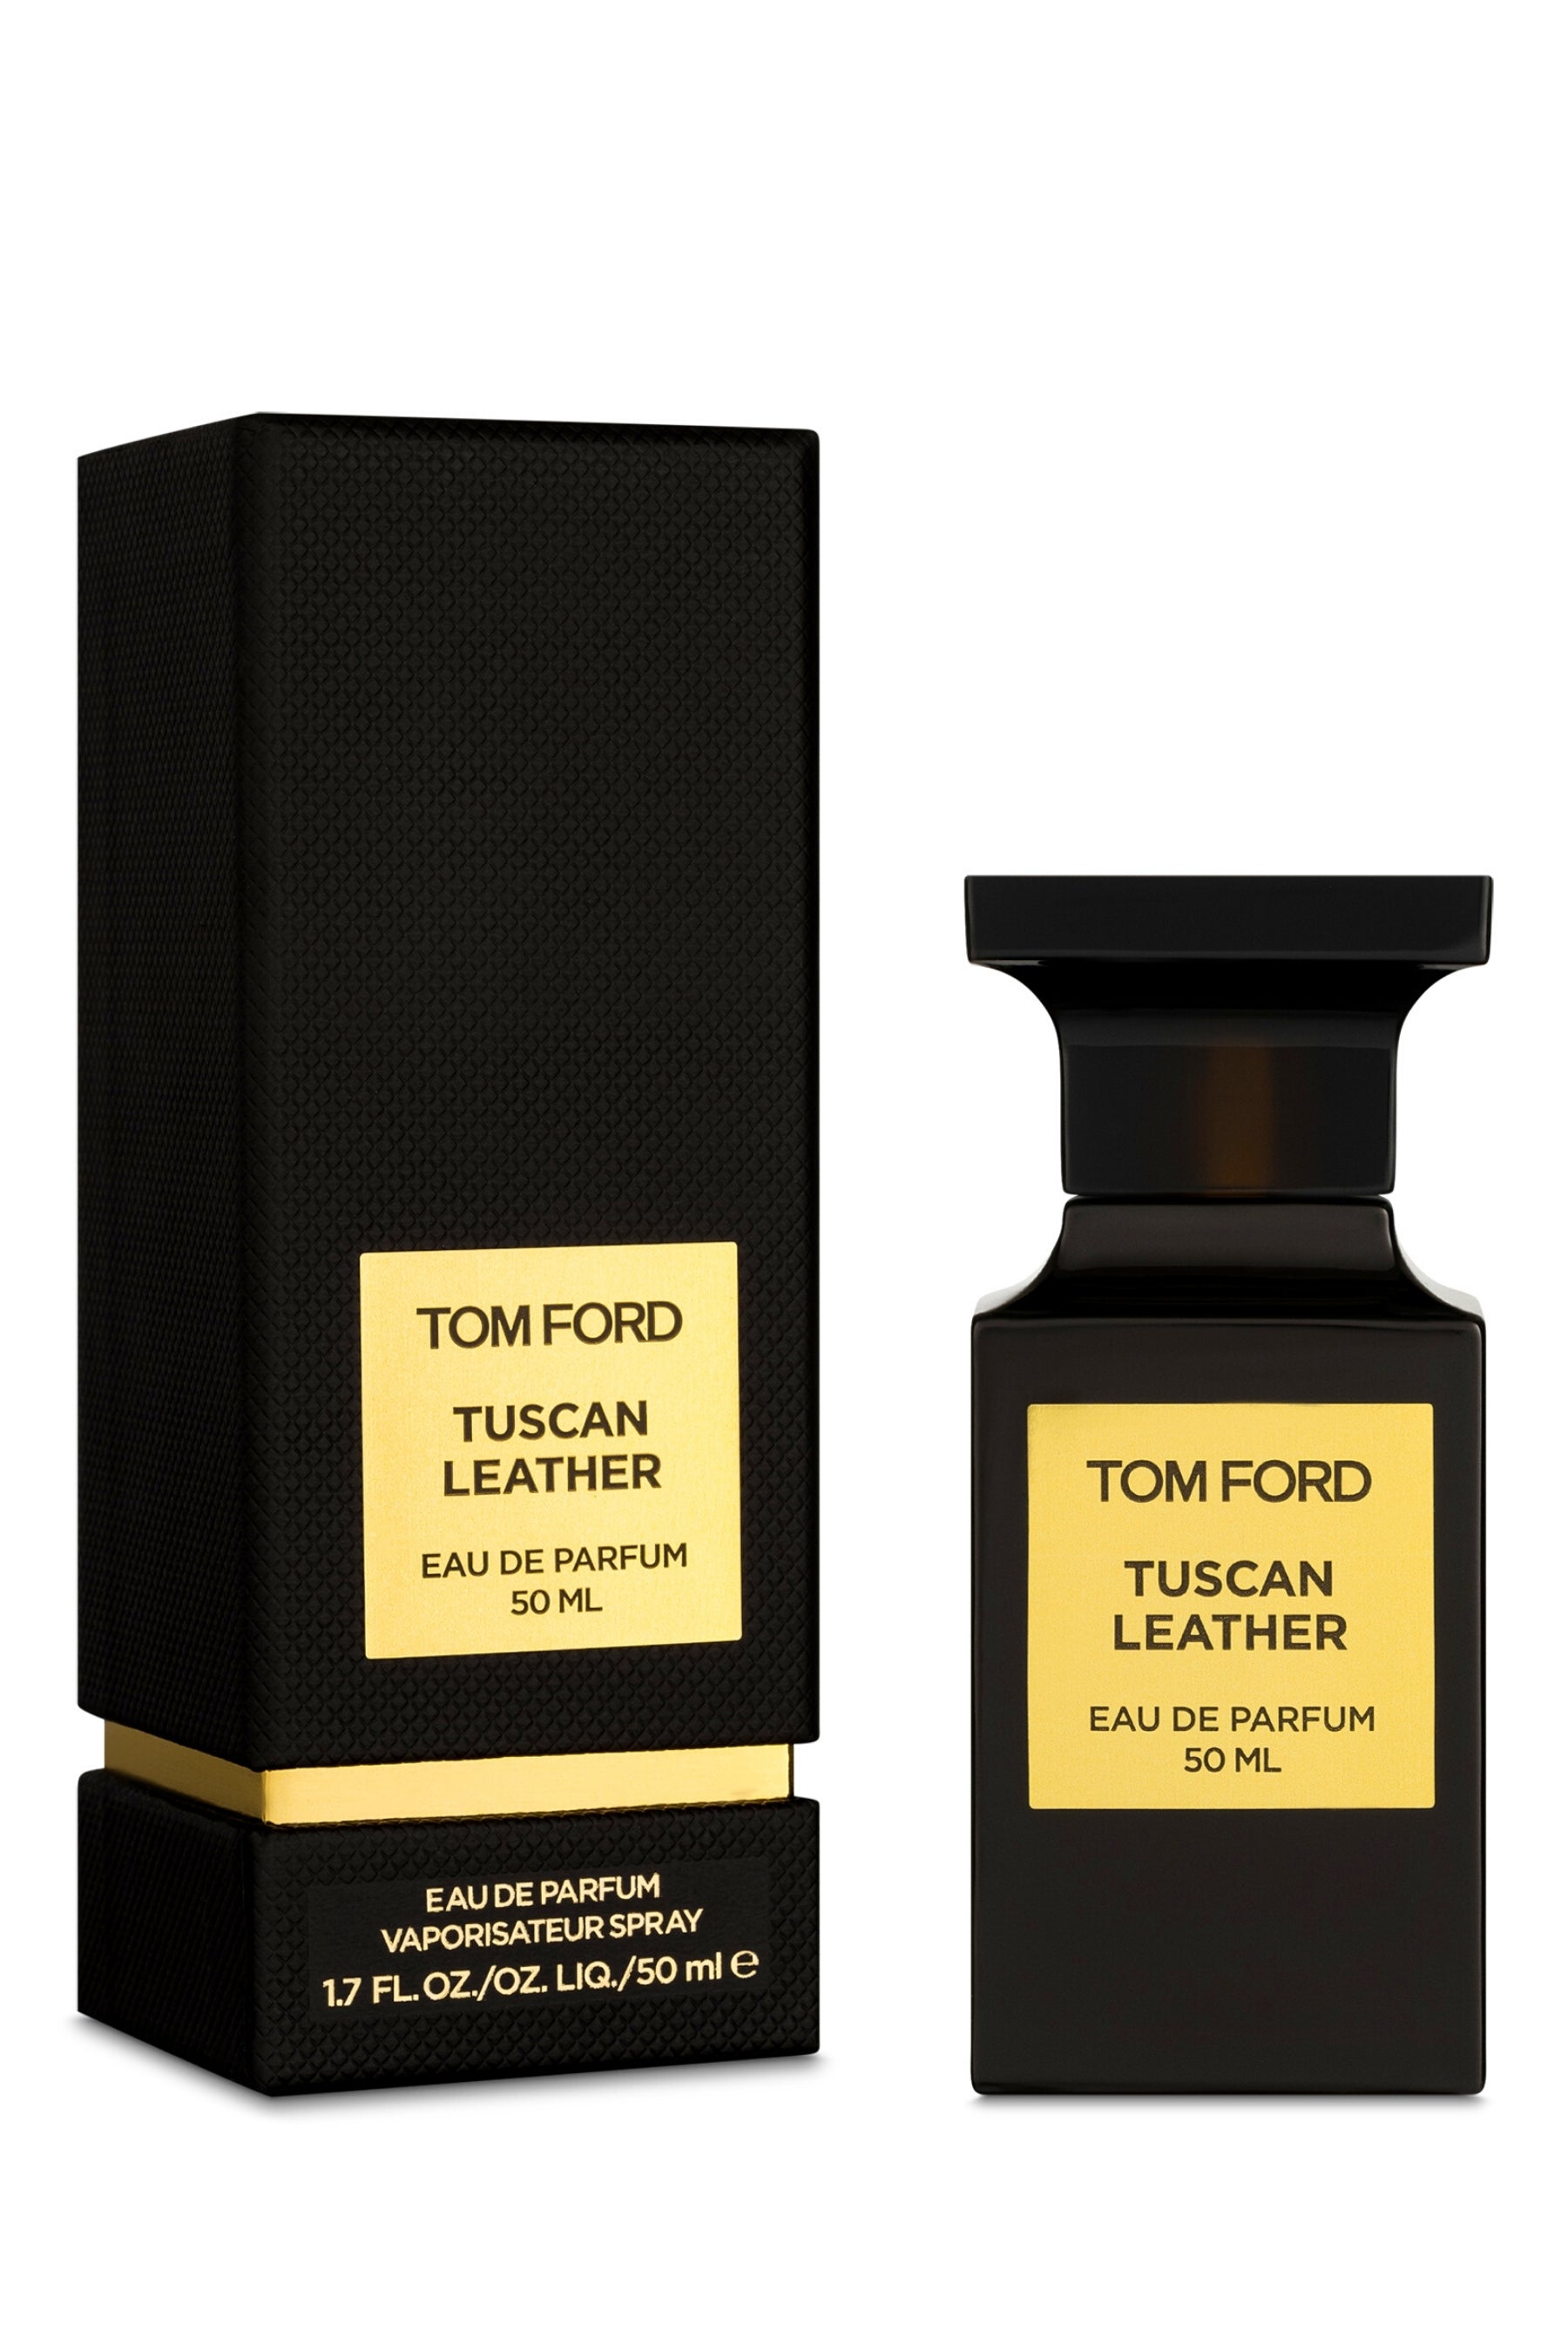 Tom Ford | Tuscan Leather Eau de Parfum